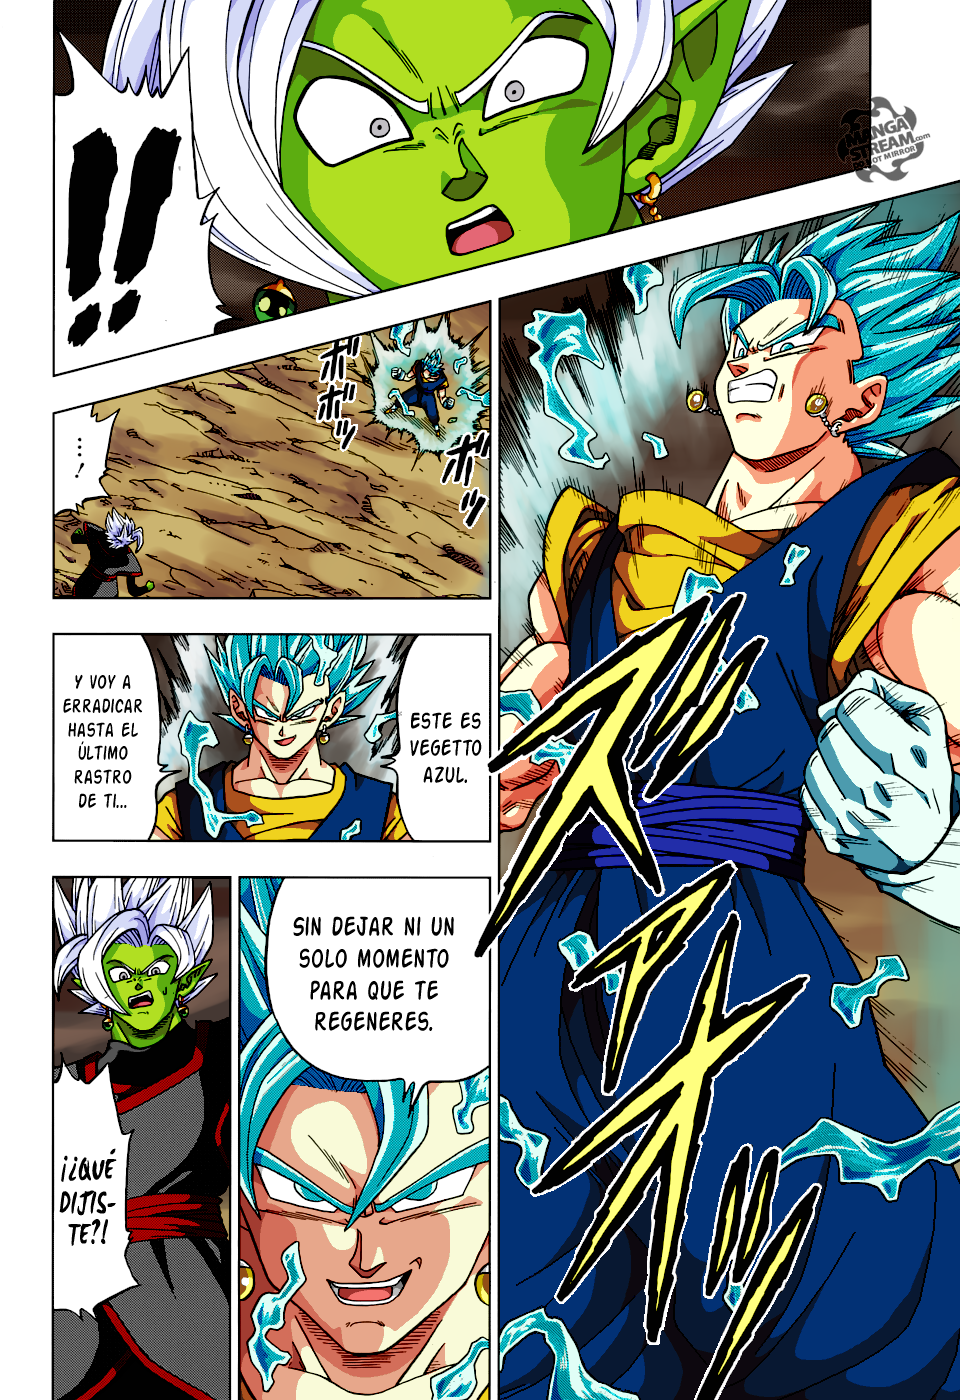 Dragon ball Super - Capitulo 69 Manga by SebasForeverhpt123 on DeviantArt